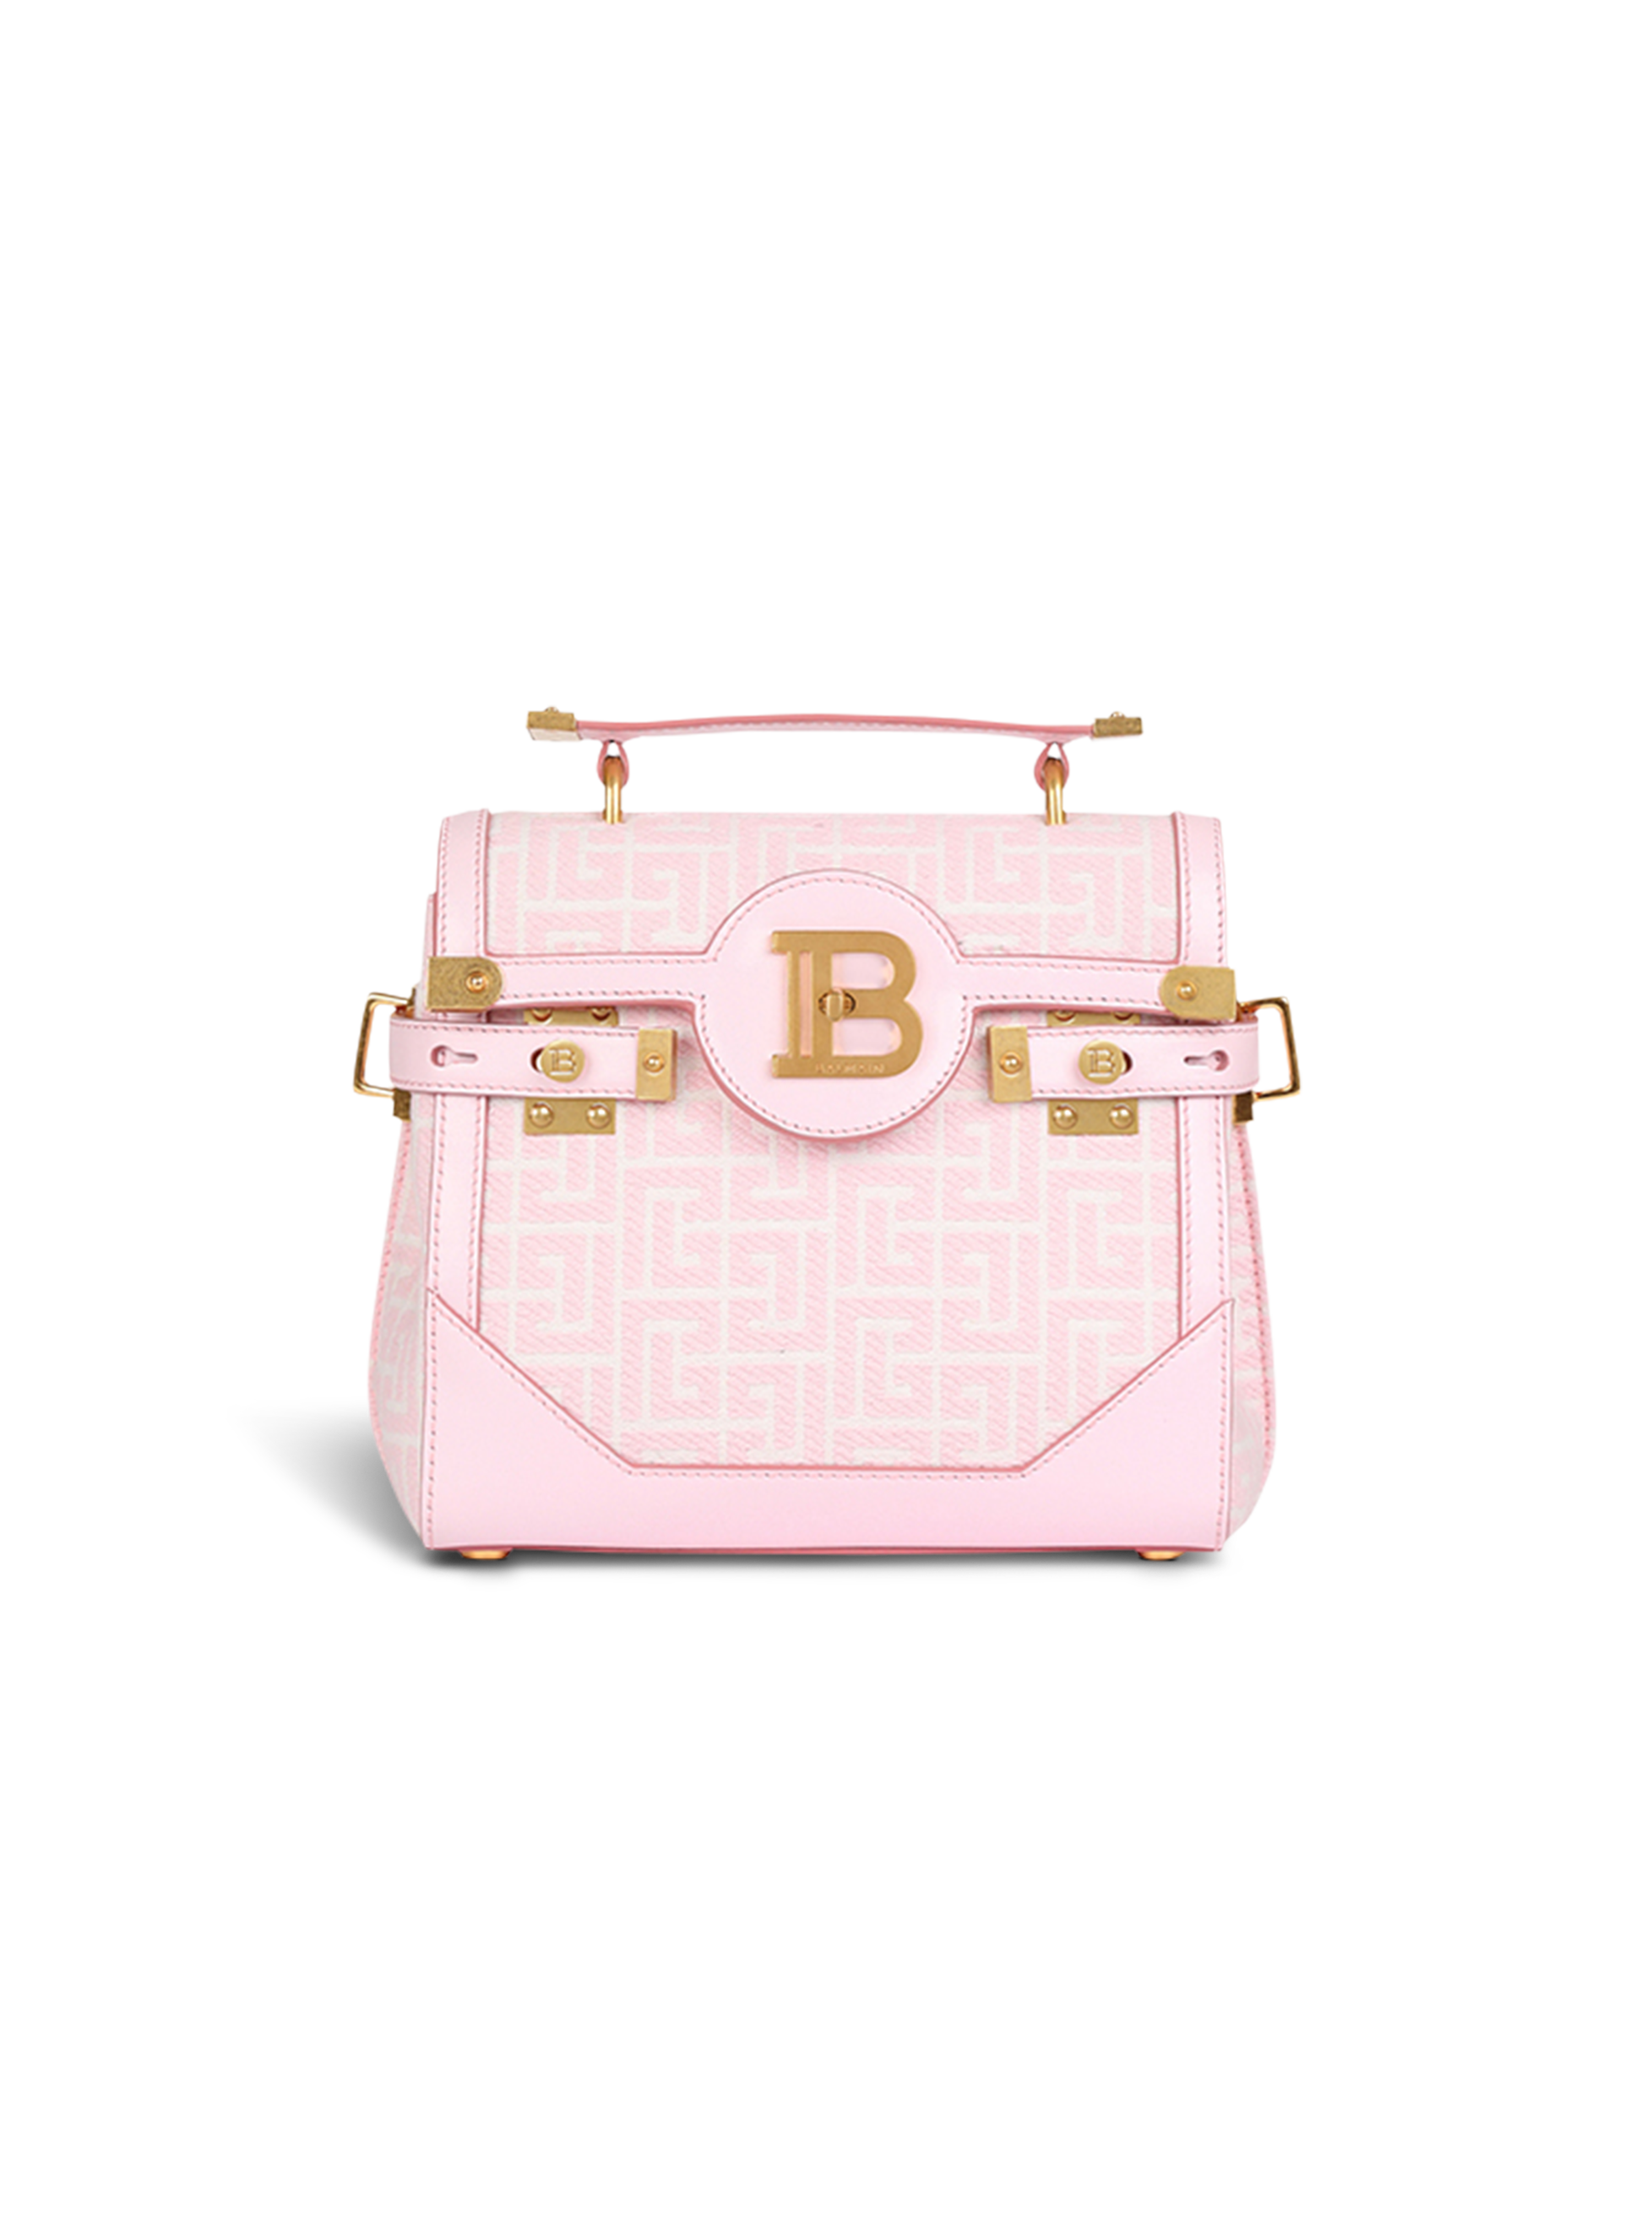 B-Buzz 23 皮革拼饰装饰双色提花包, pink